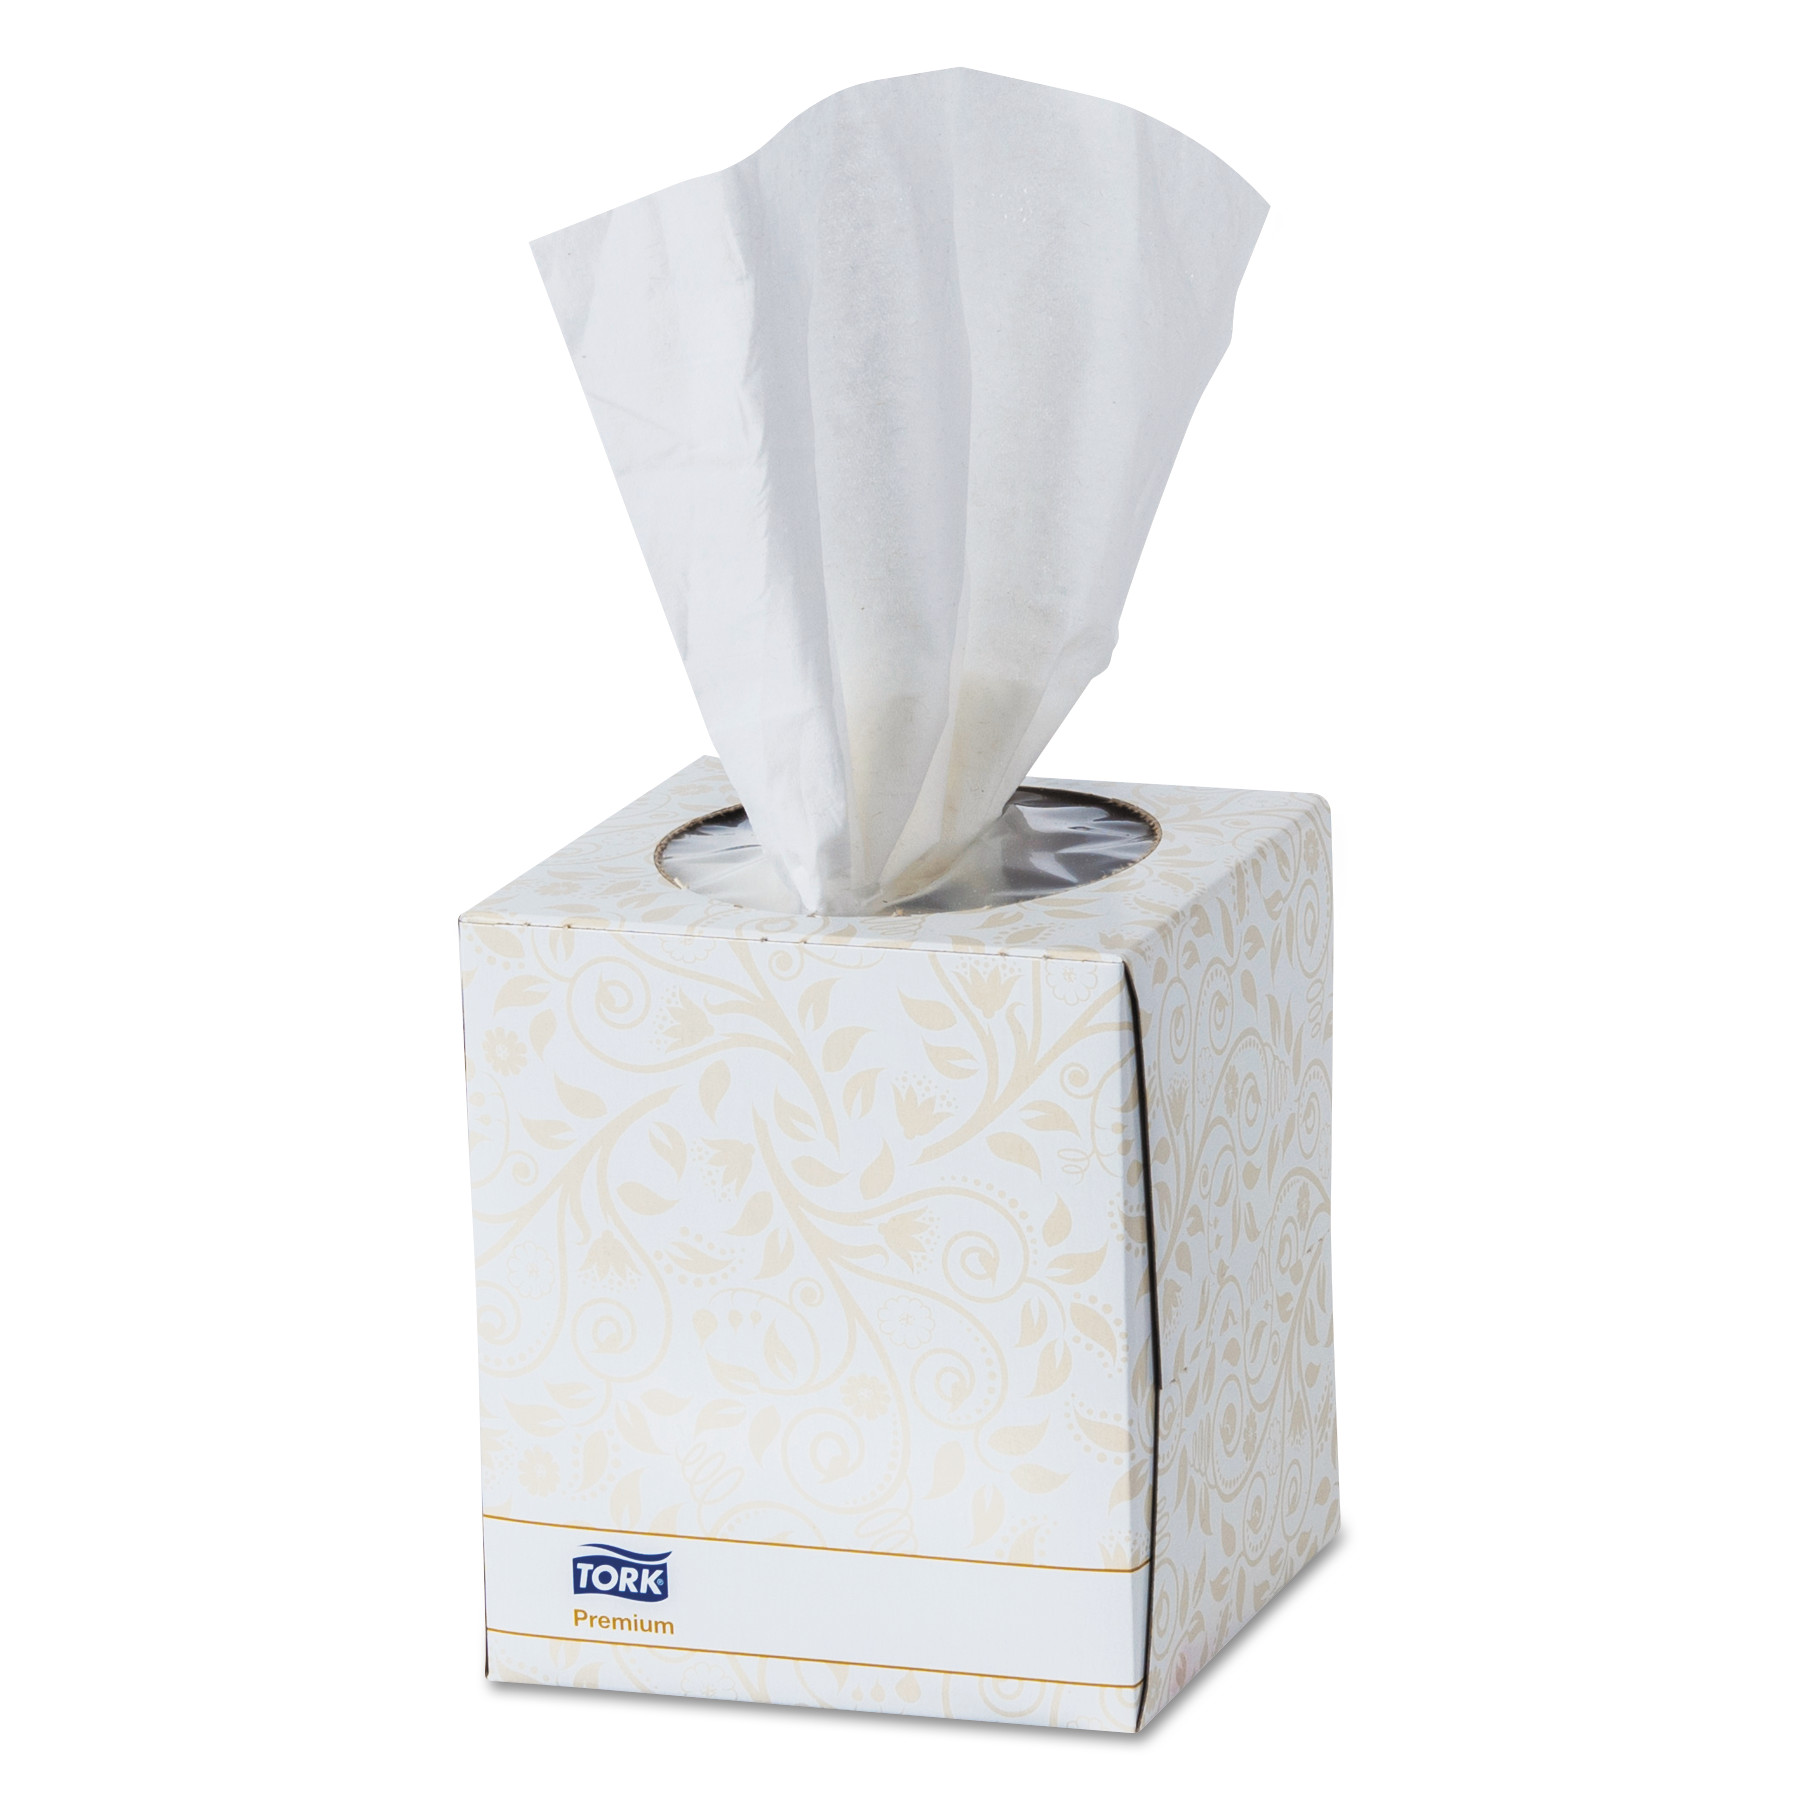 Premium Facial Tissue, 2-Ply, White, 8 x 8, 94 Sheets/Box, 36BX/Carton